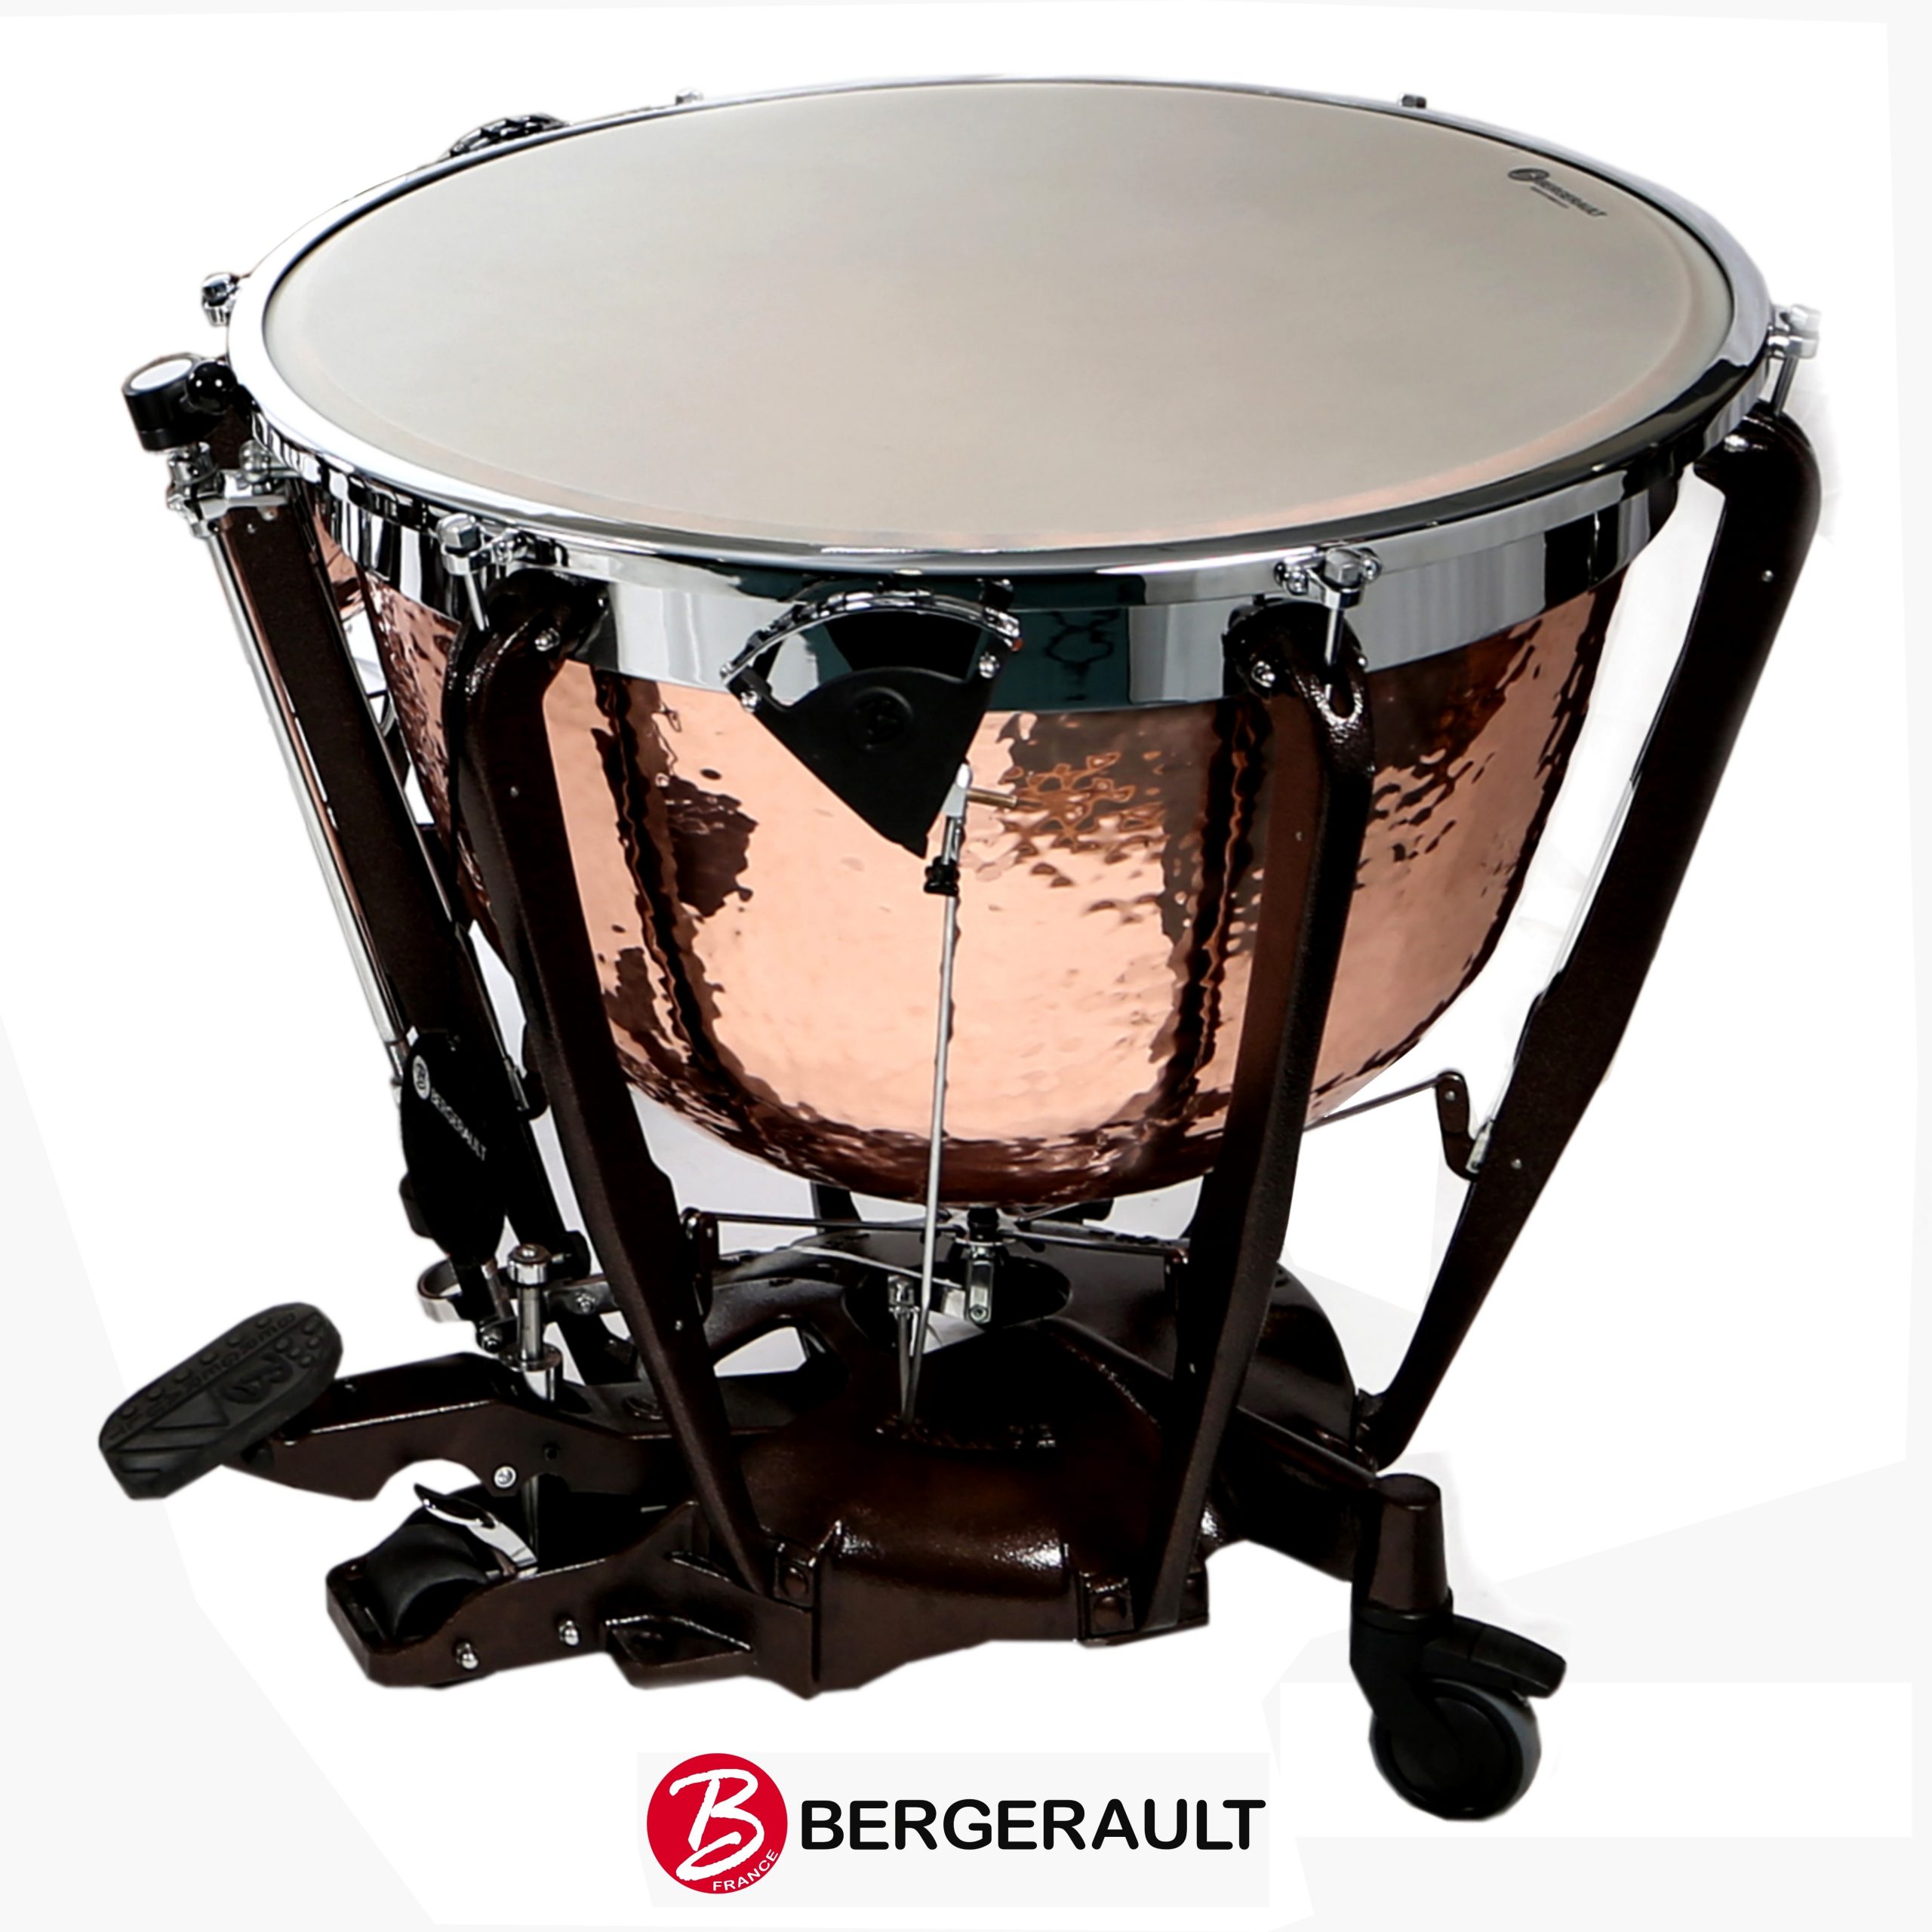 Bergerault Timpani Grand Symphonic Ø 20" cambered copper hand hammered